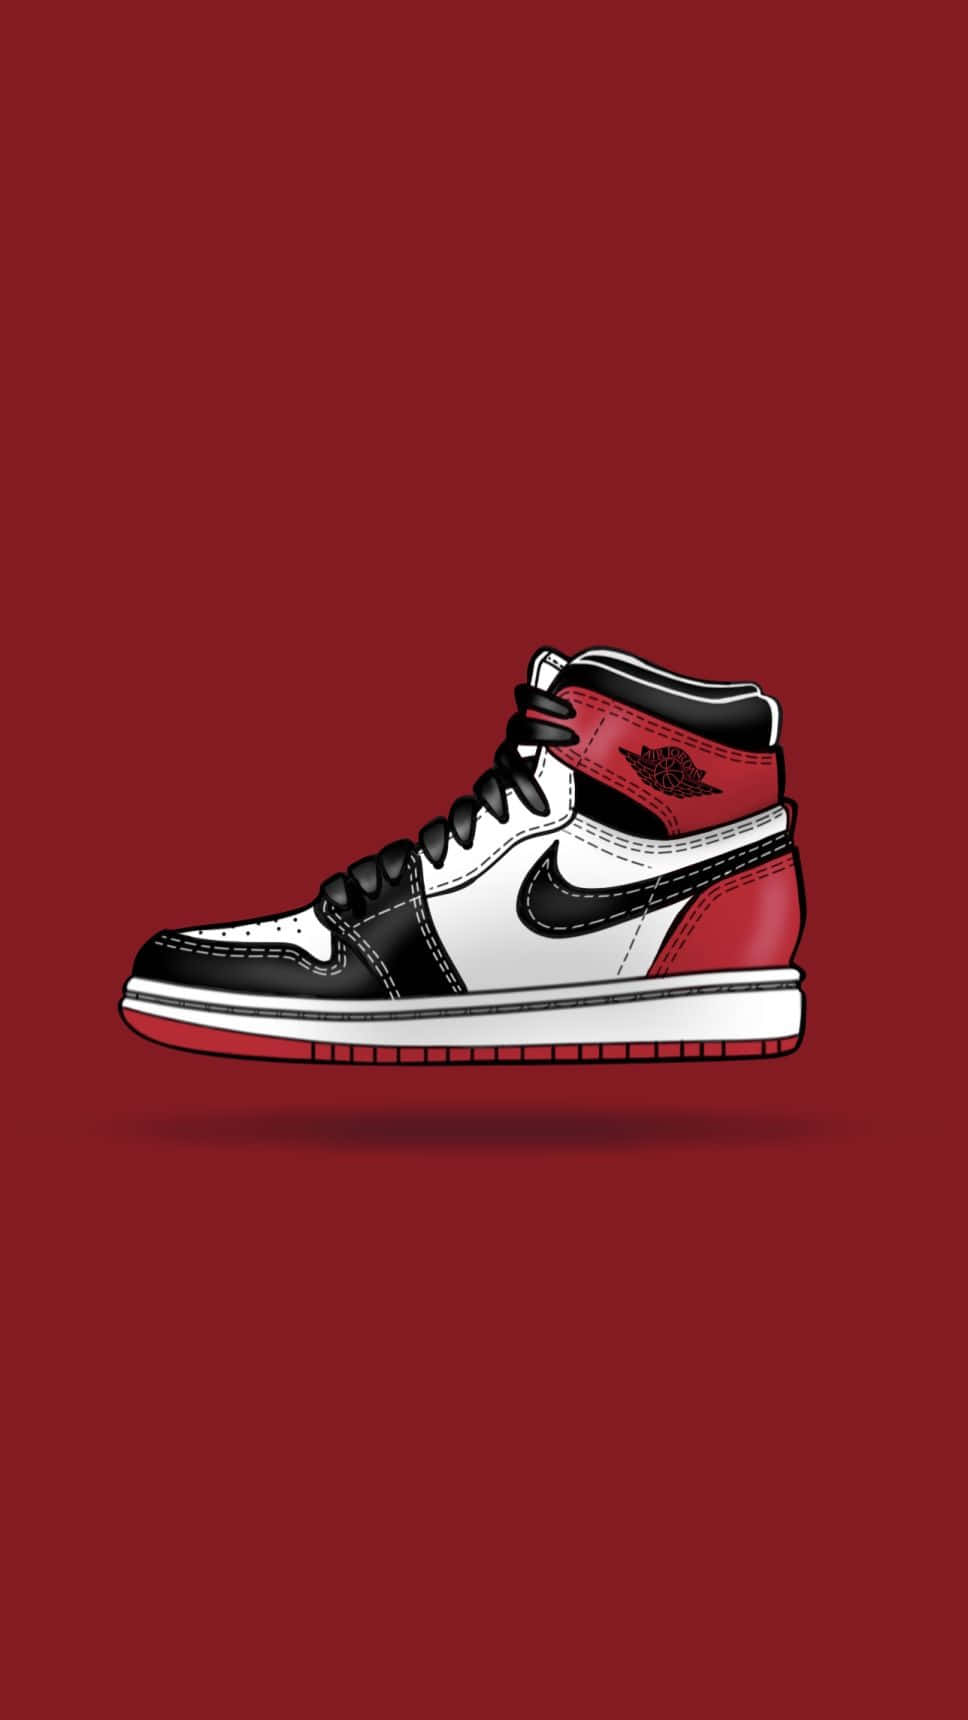 Flydende Røde Nike Jordan Air 1 Sko Wallpaper